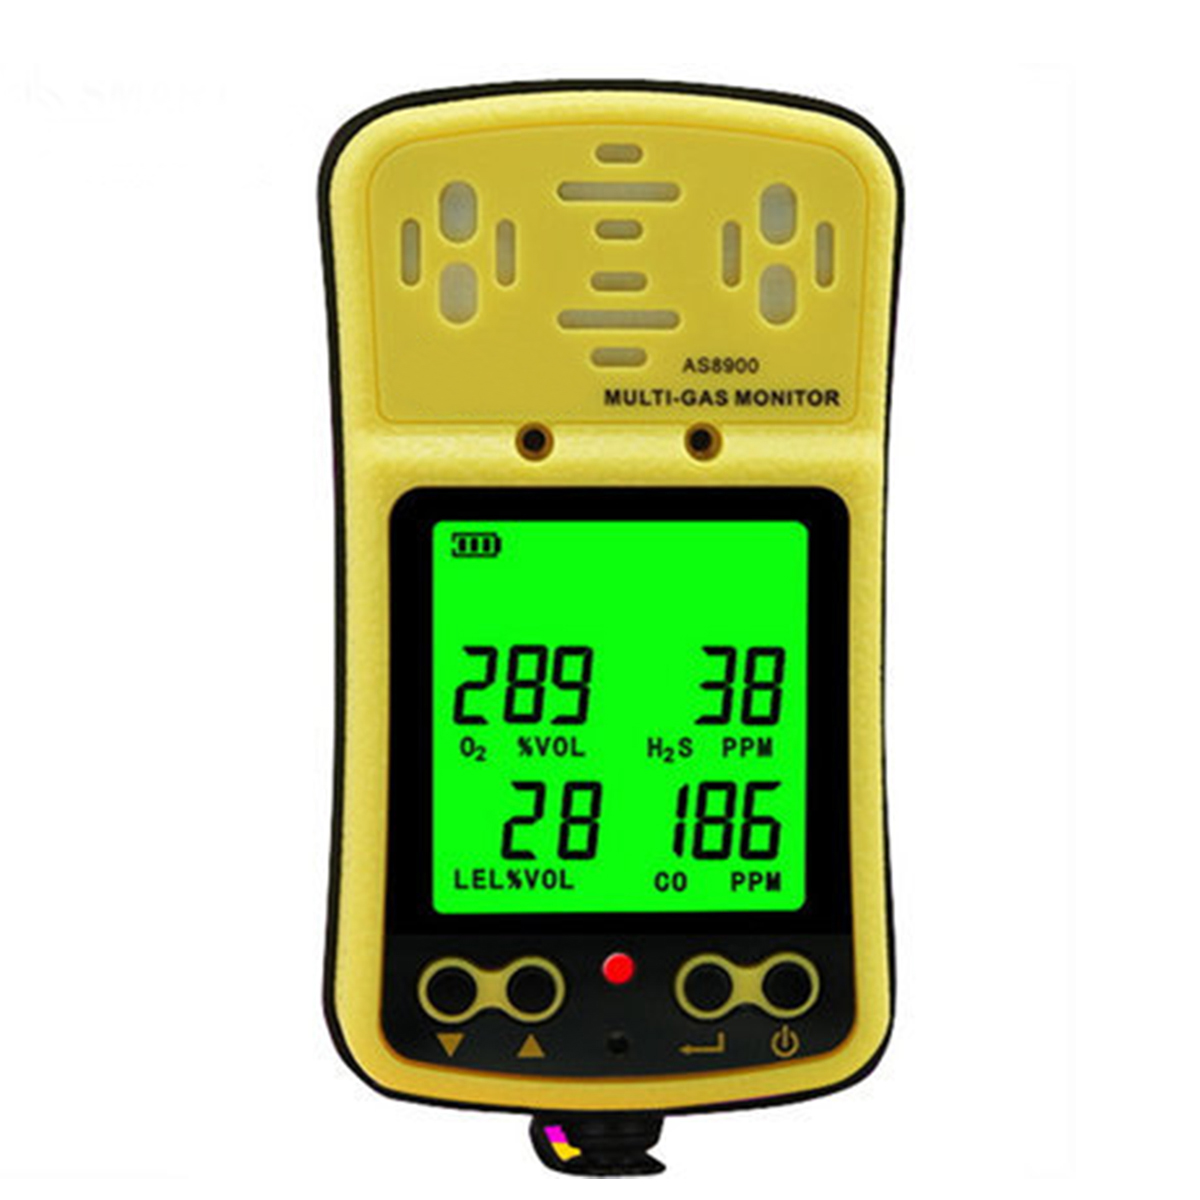 

Multi Gas Monitor Handheld Gas Detector 4 in 1 Gas Analyzer AS8900